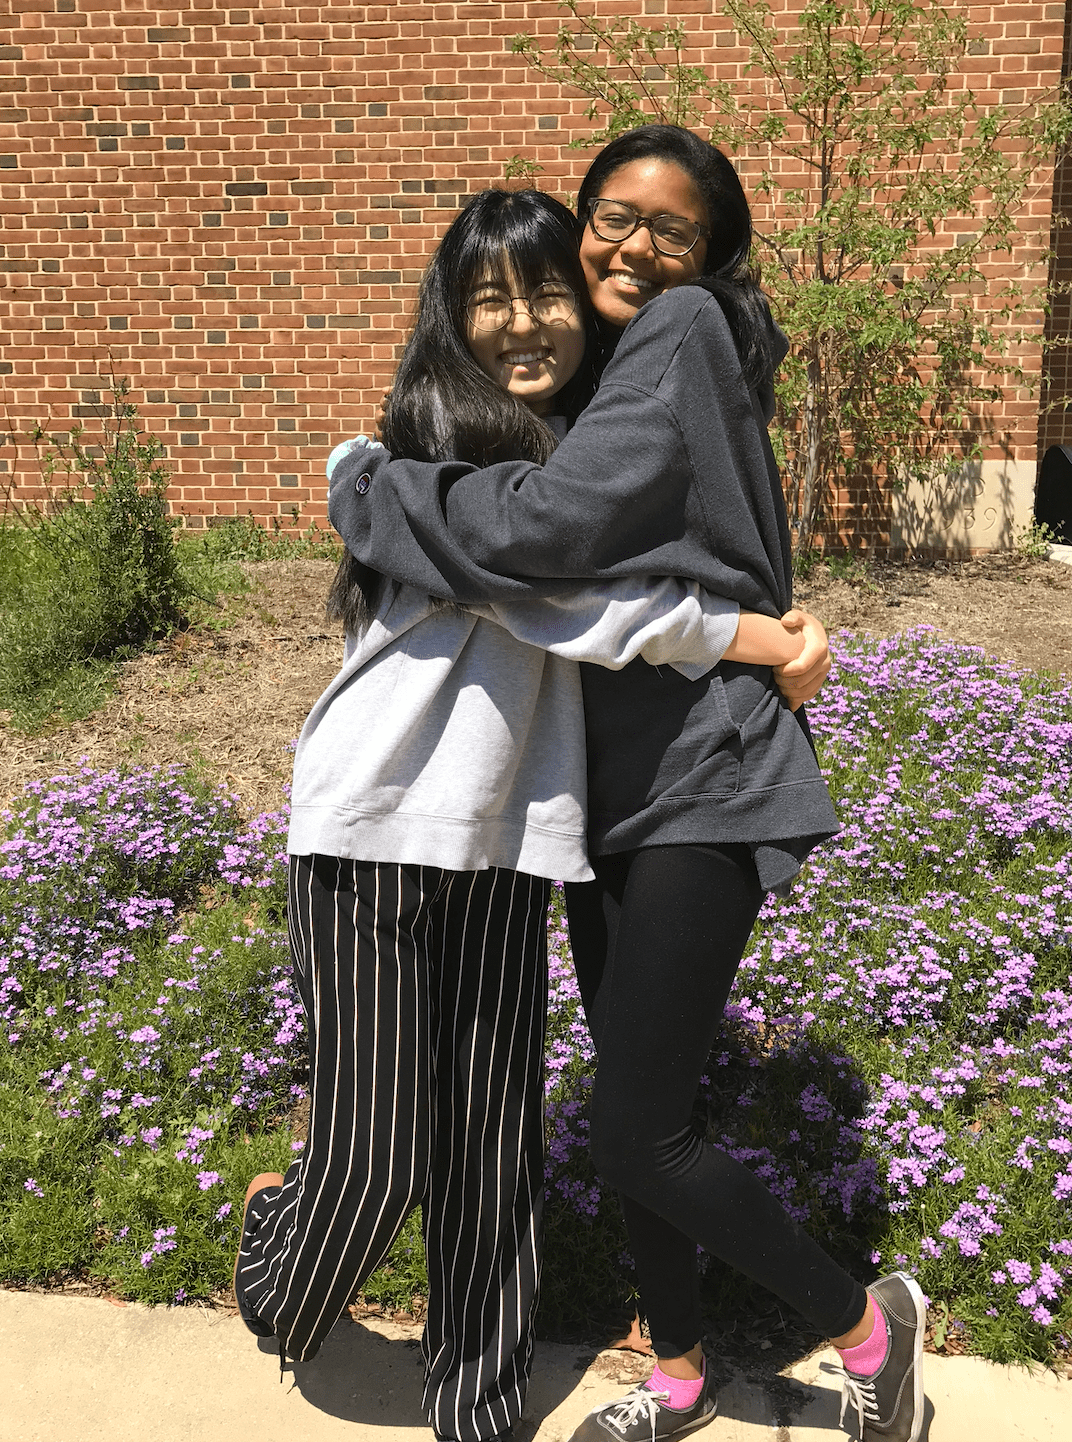 Zani and her friend hug while wearing an NYU sweater